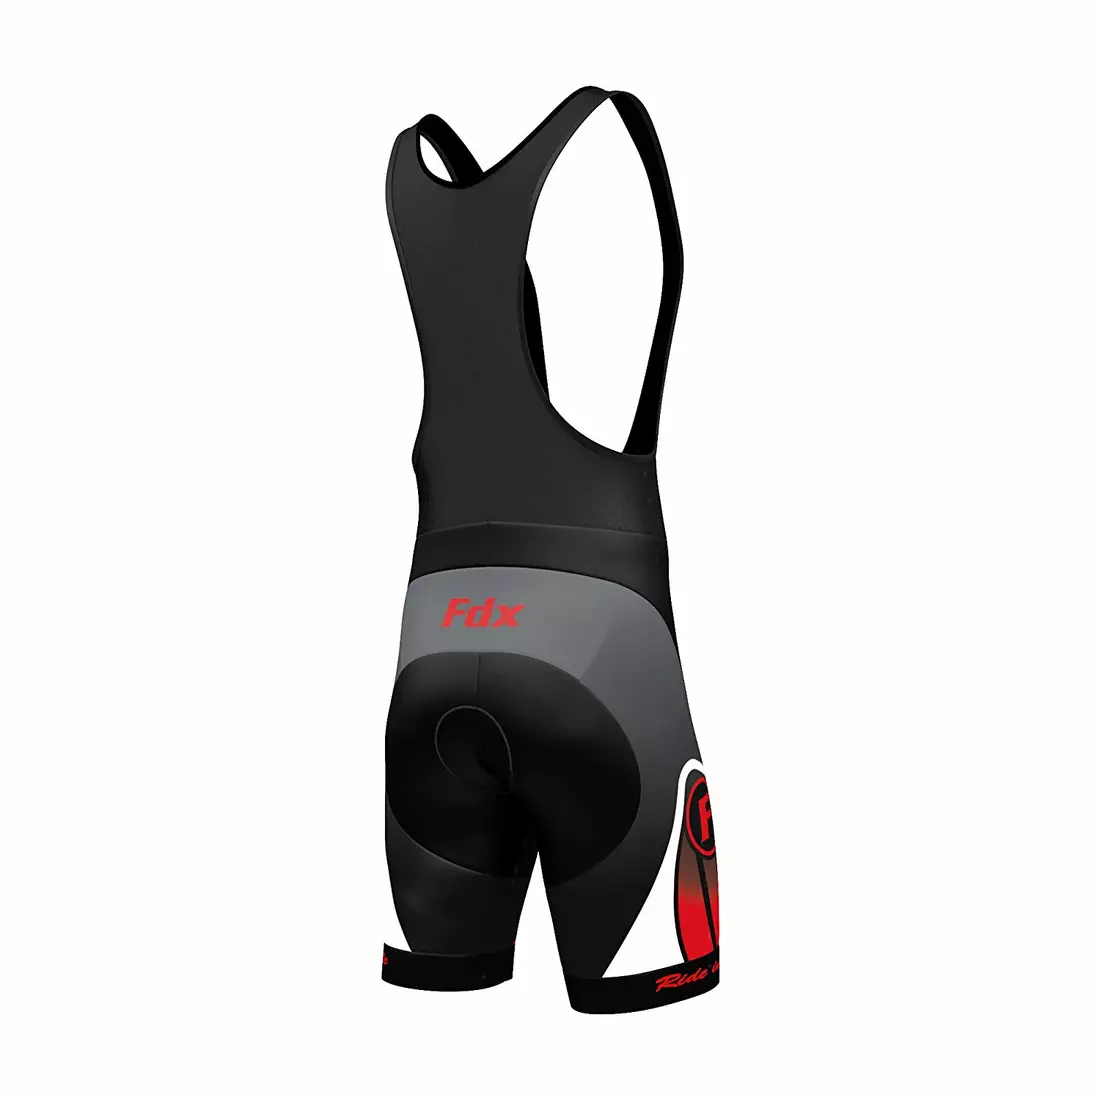 FDX 1020 summer cycling set: jersey + bib shorts, black and red